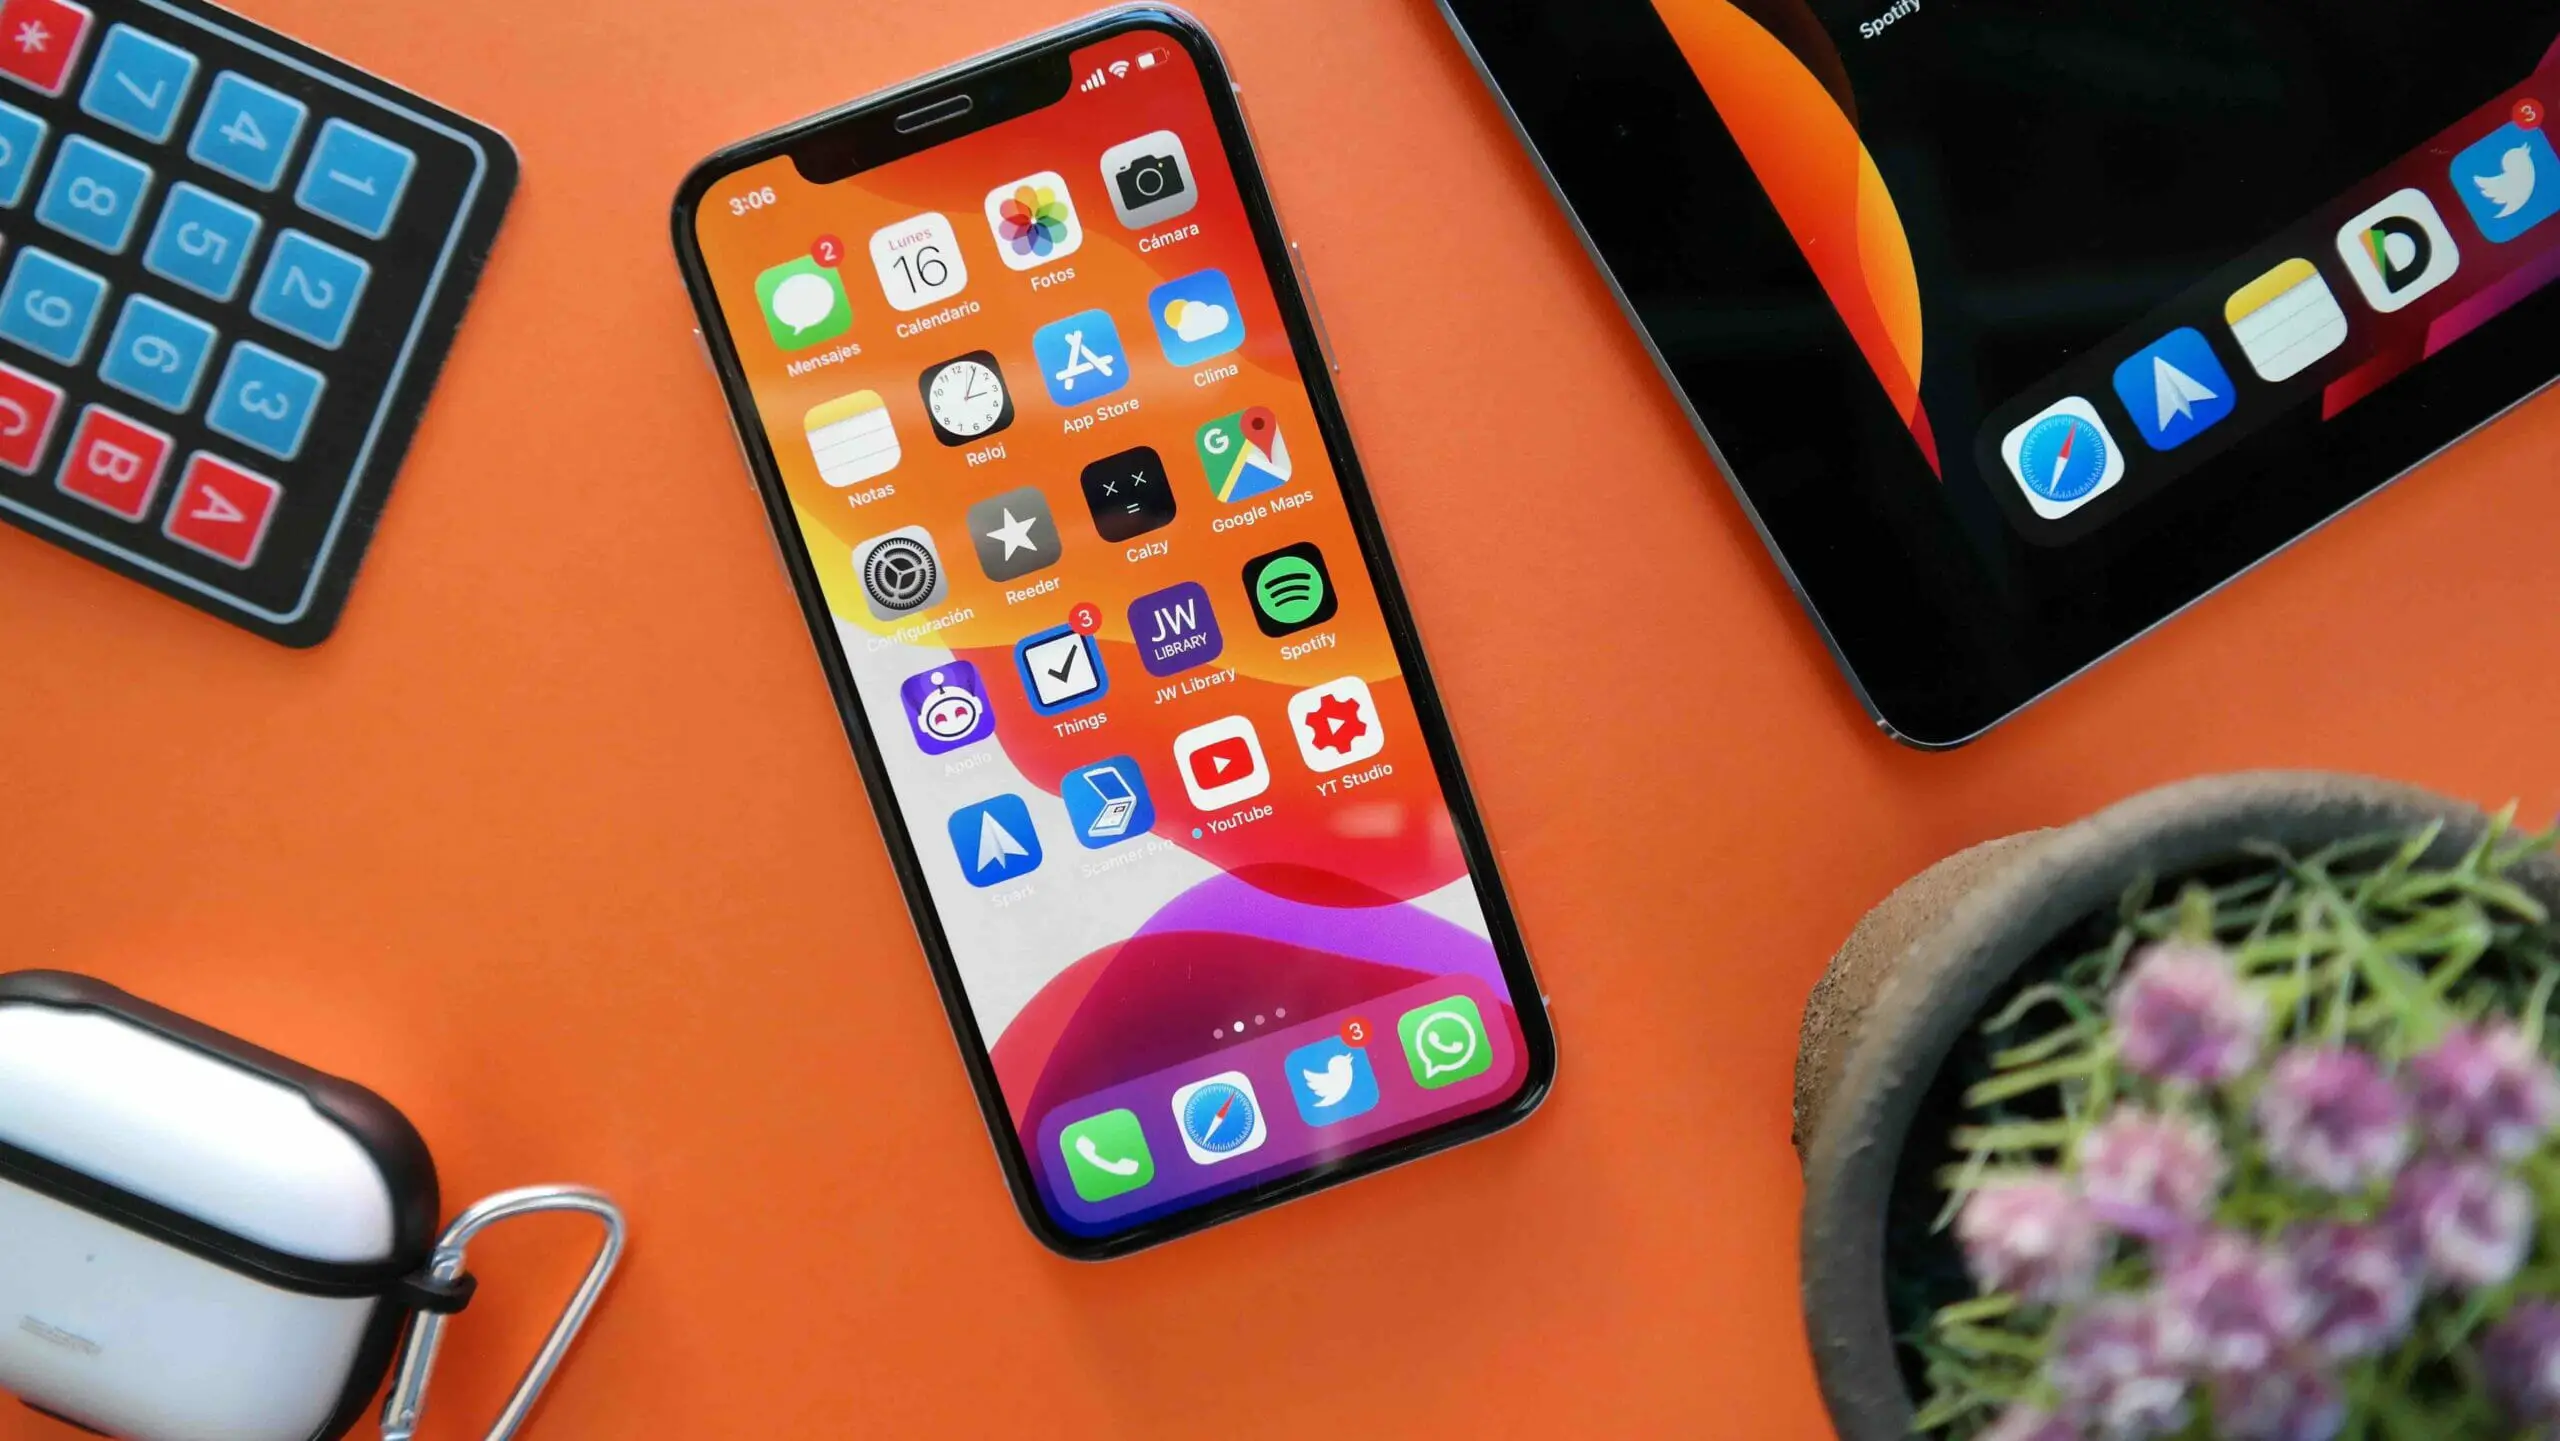 iPhone with iPad on orange background